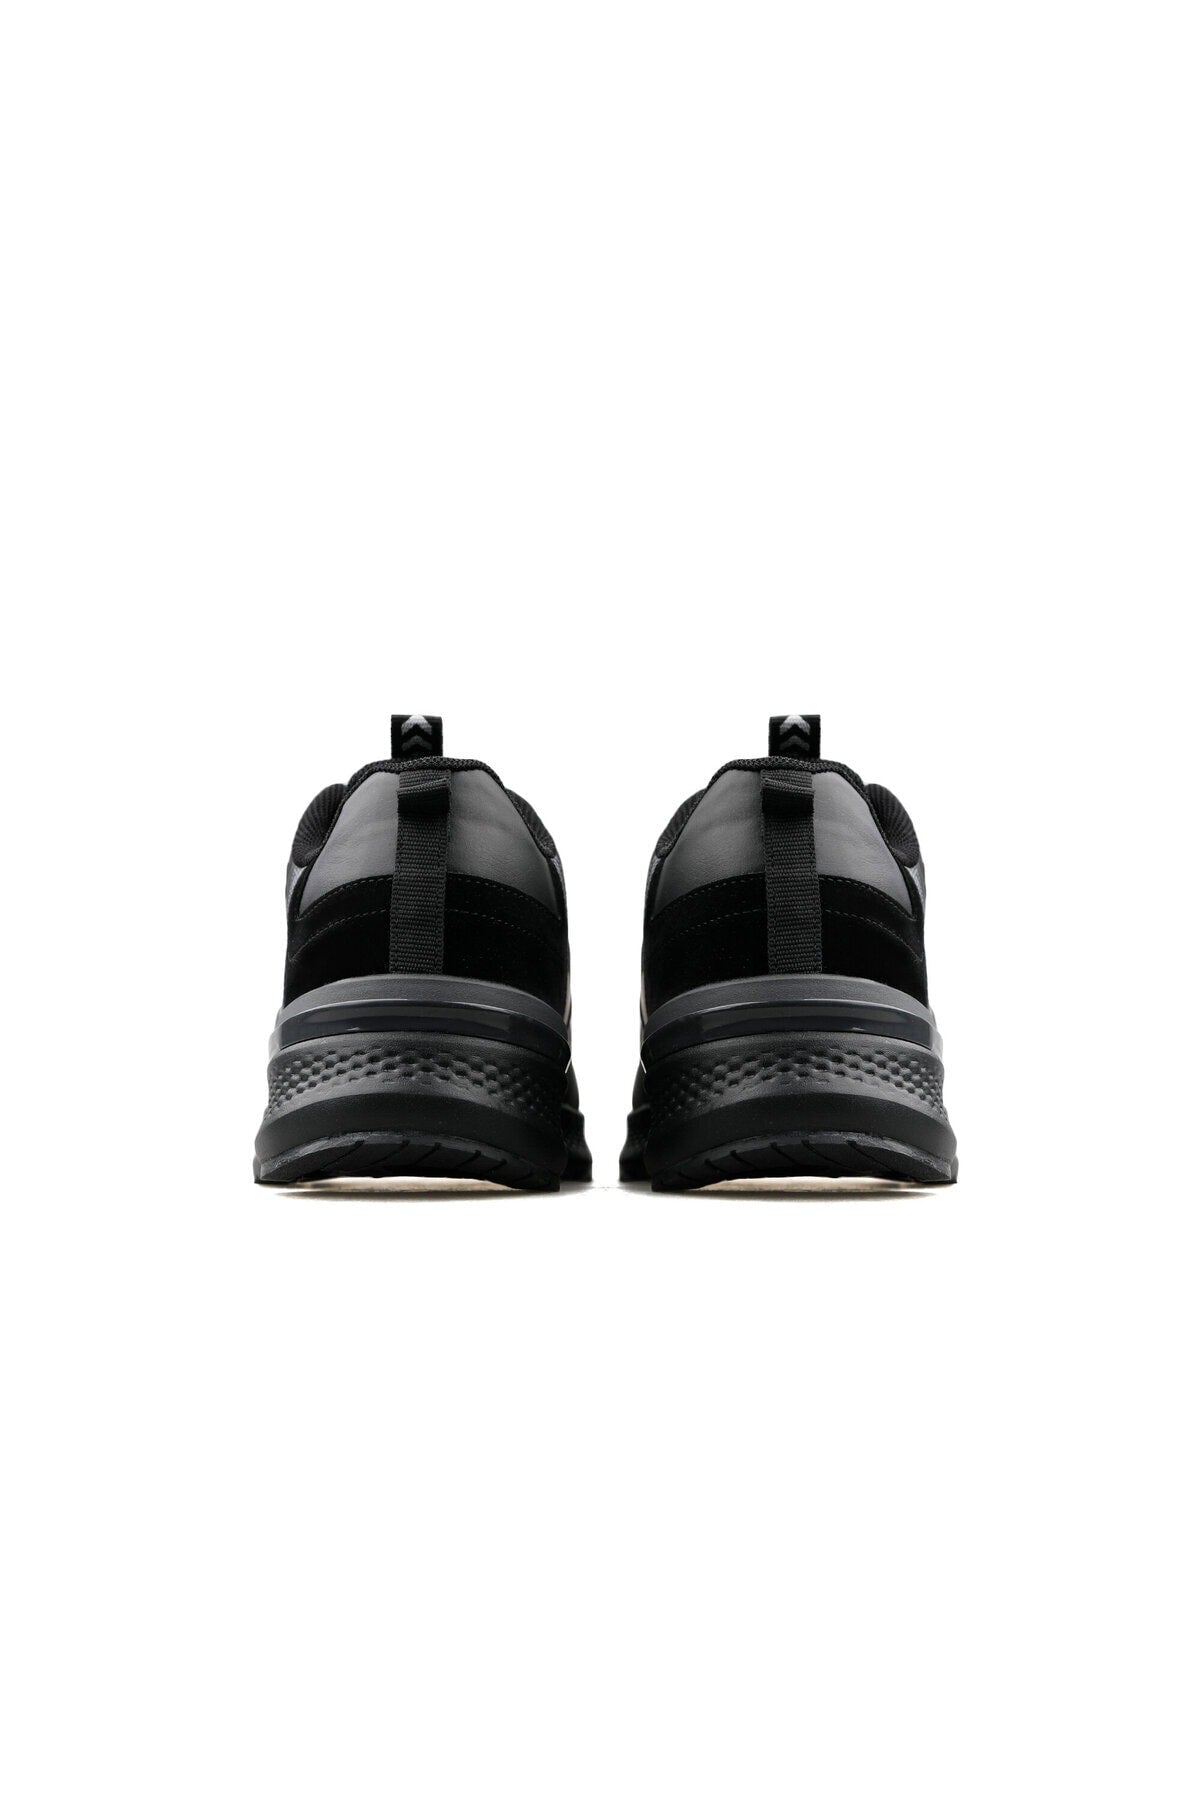 Hml Xuma Men's Casual Shoes 900136-2001 Black